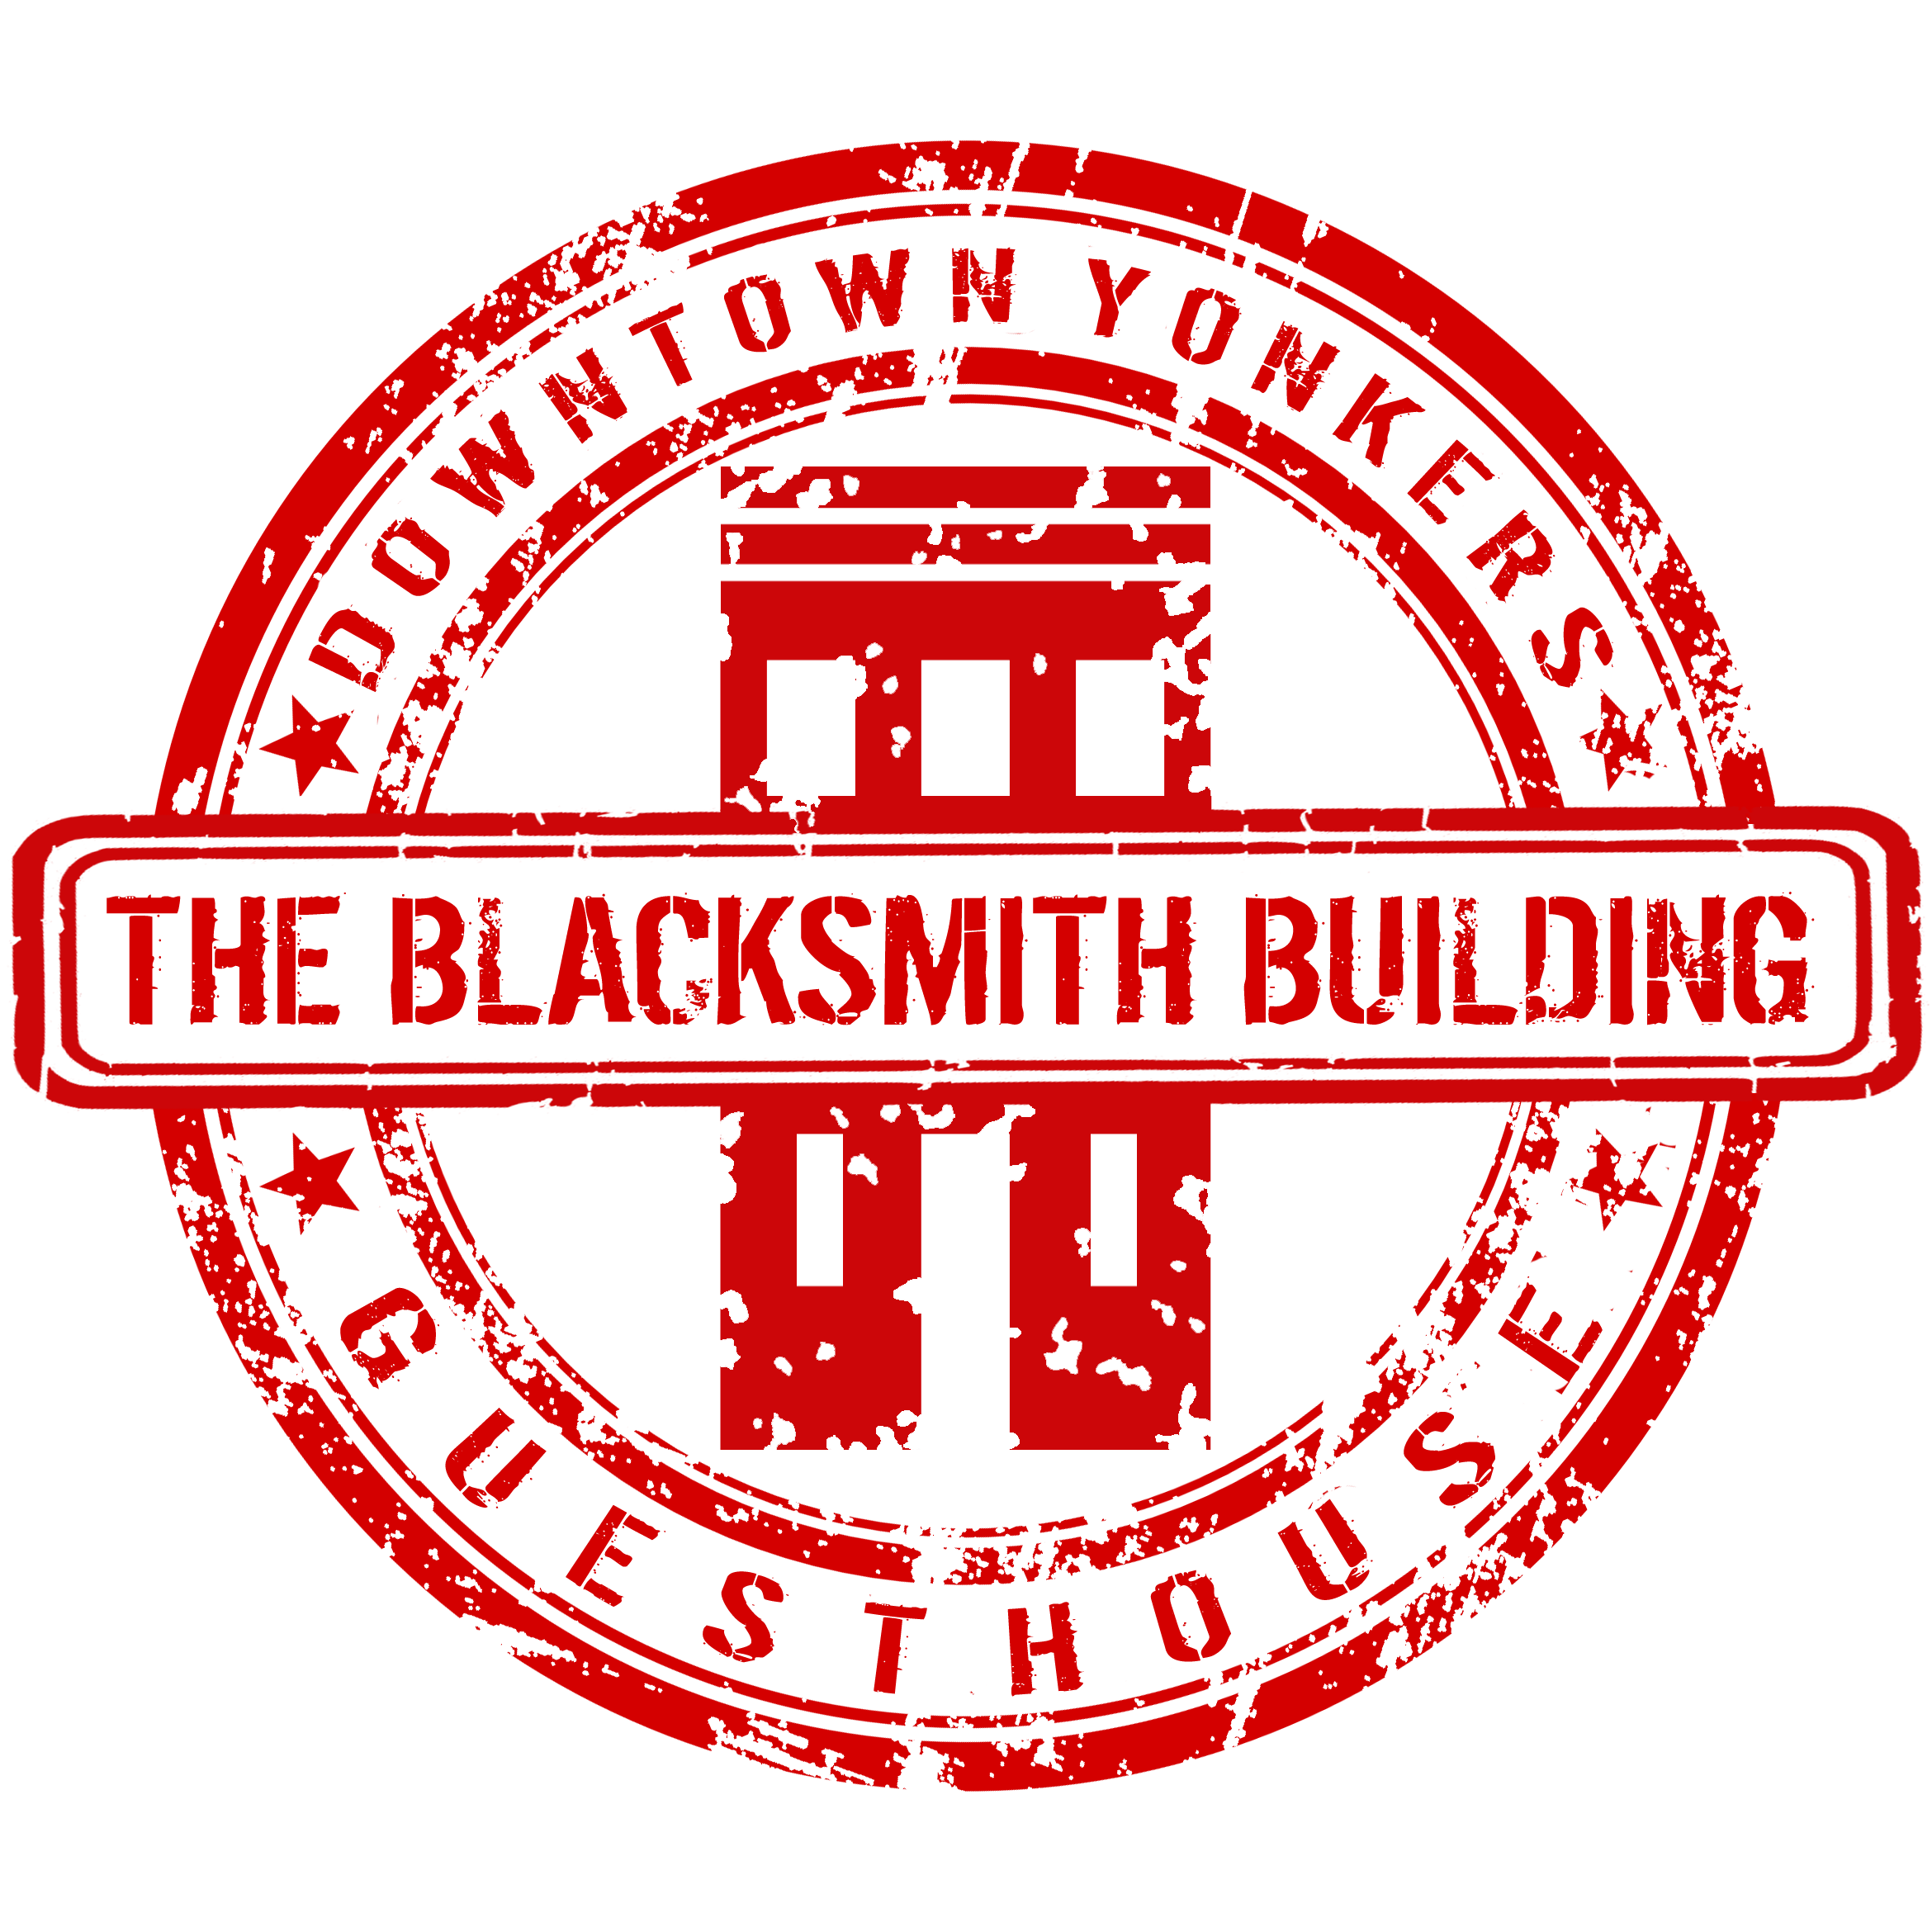 The Blacksmith Building